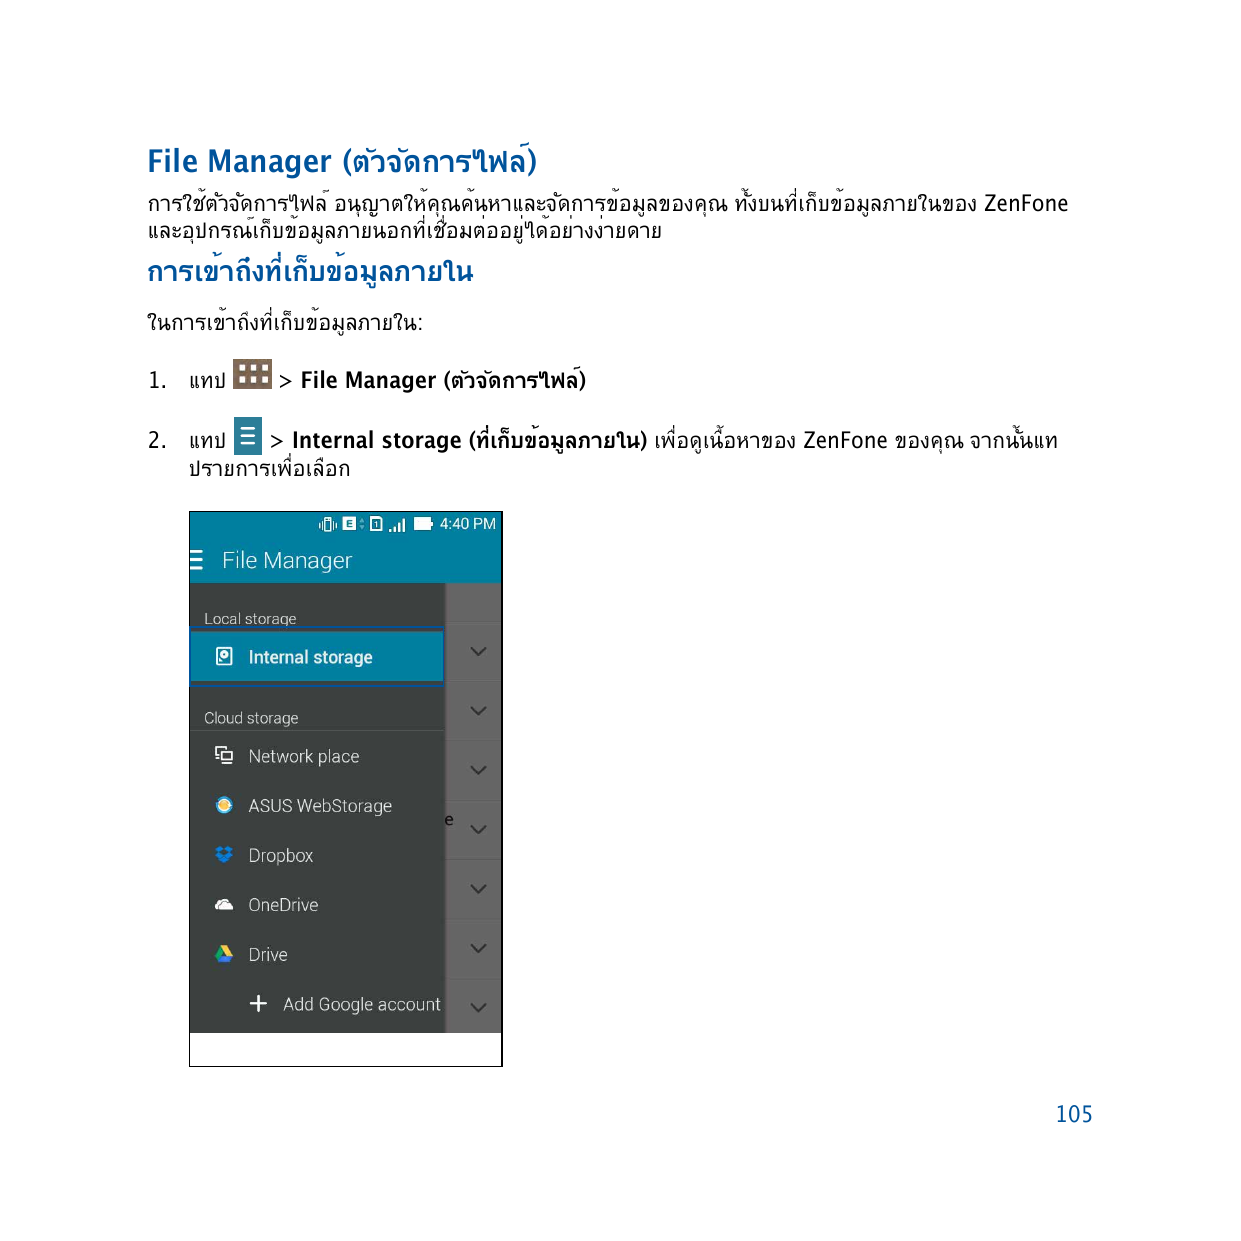 File Manager (ตัวจัดการไฟล์)การใช้ตัวจัดการไฟล์ อนุญาตให้คุณค้นหาและจัดการข้อมูลของคุณ ทั้งบนที่เก็บข้อมูลภายในของ ZenFoneและอุป